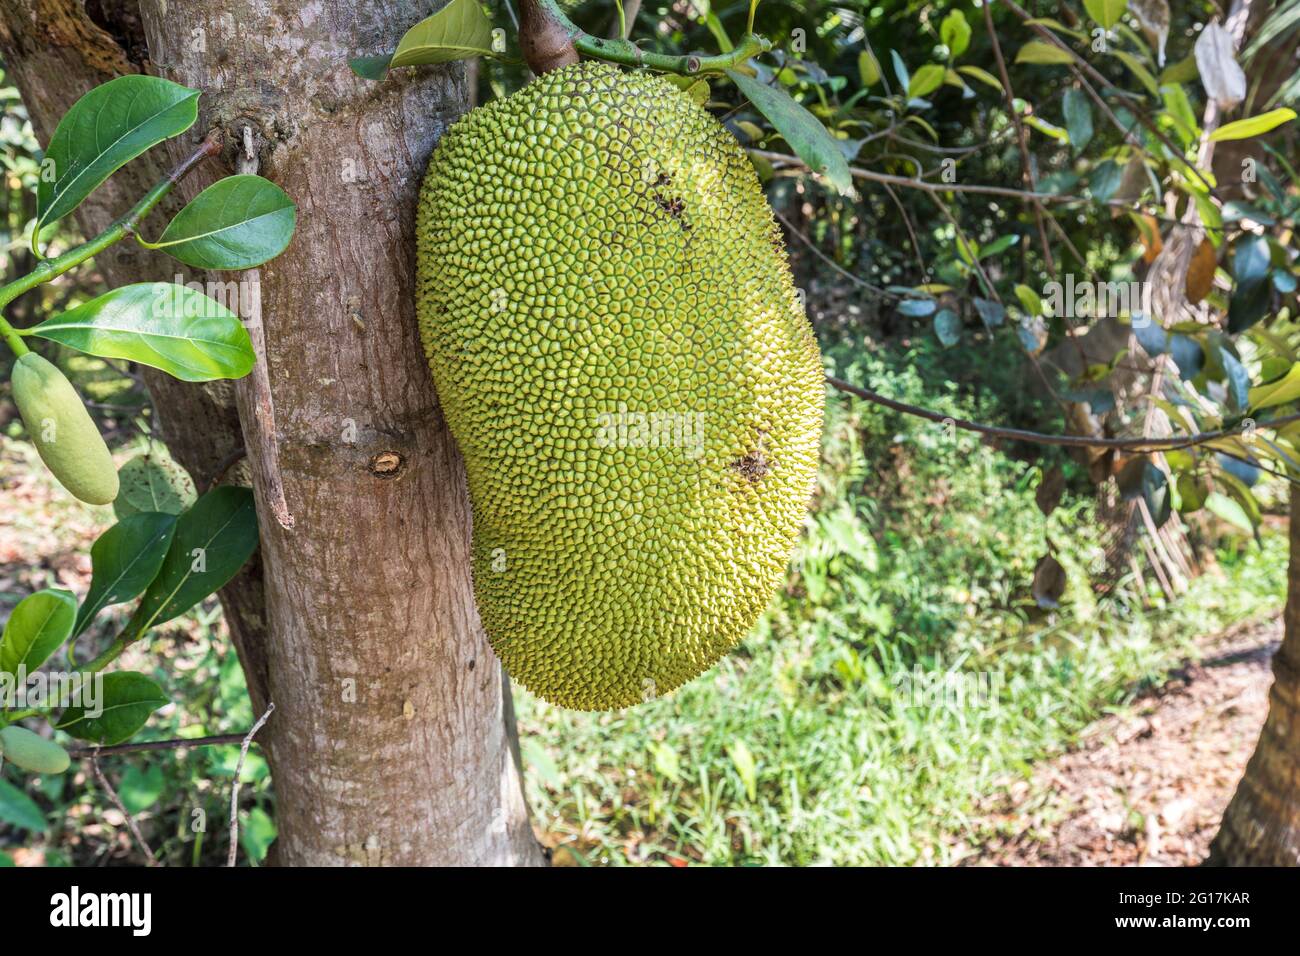 Jackfruit, Artocarpus heterophyllus, Moraceae family, Wat Bang Kung, Thailand Stock Photo